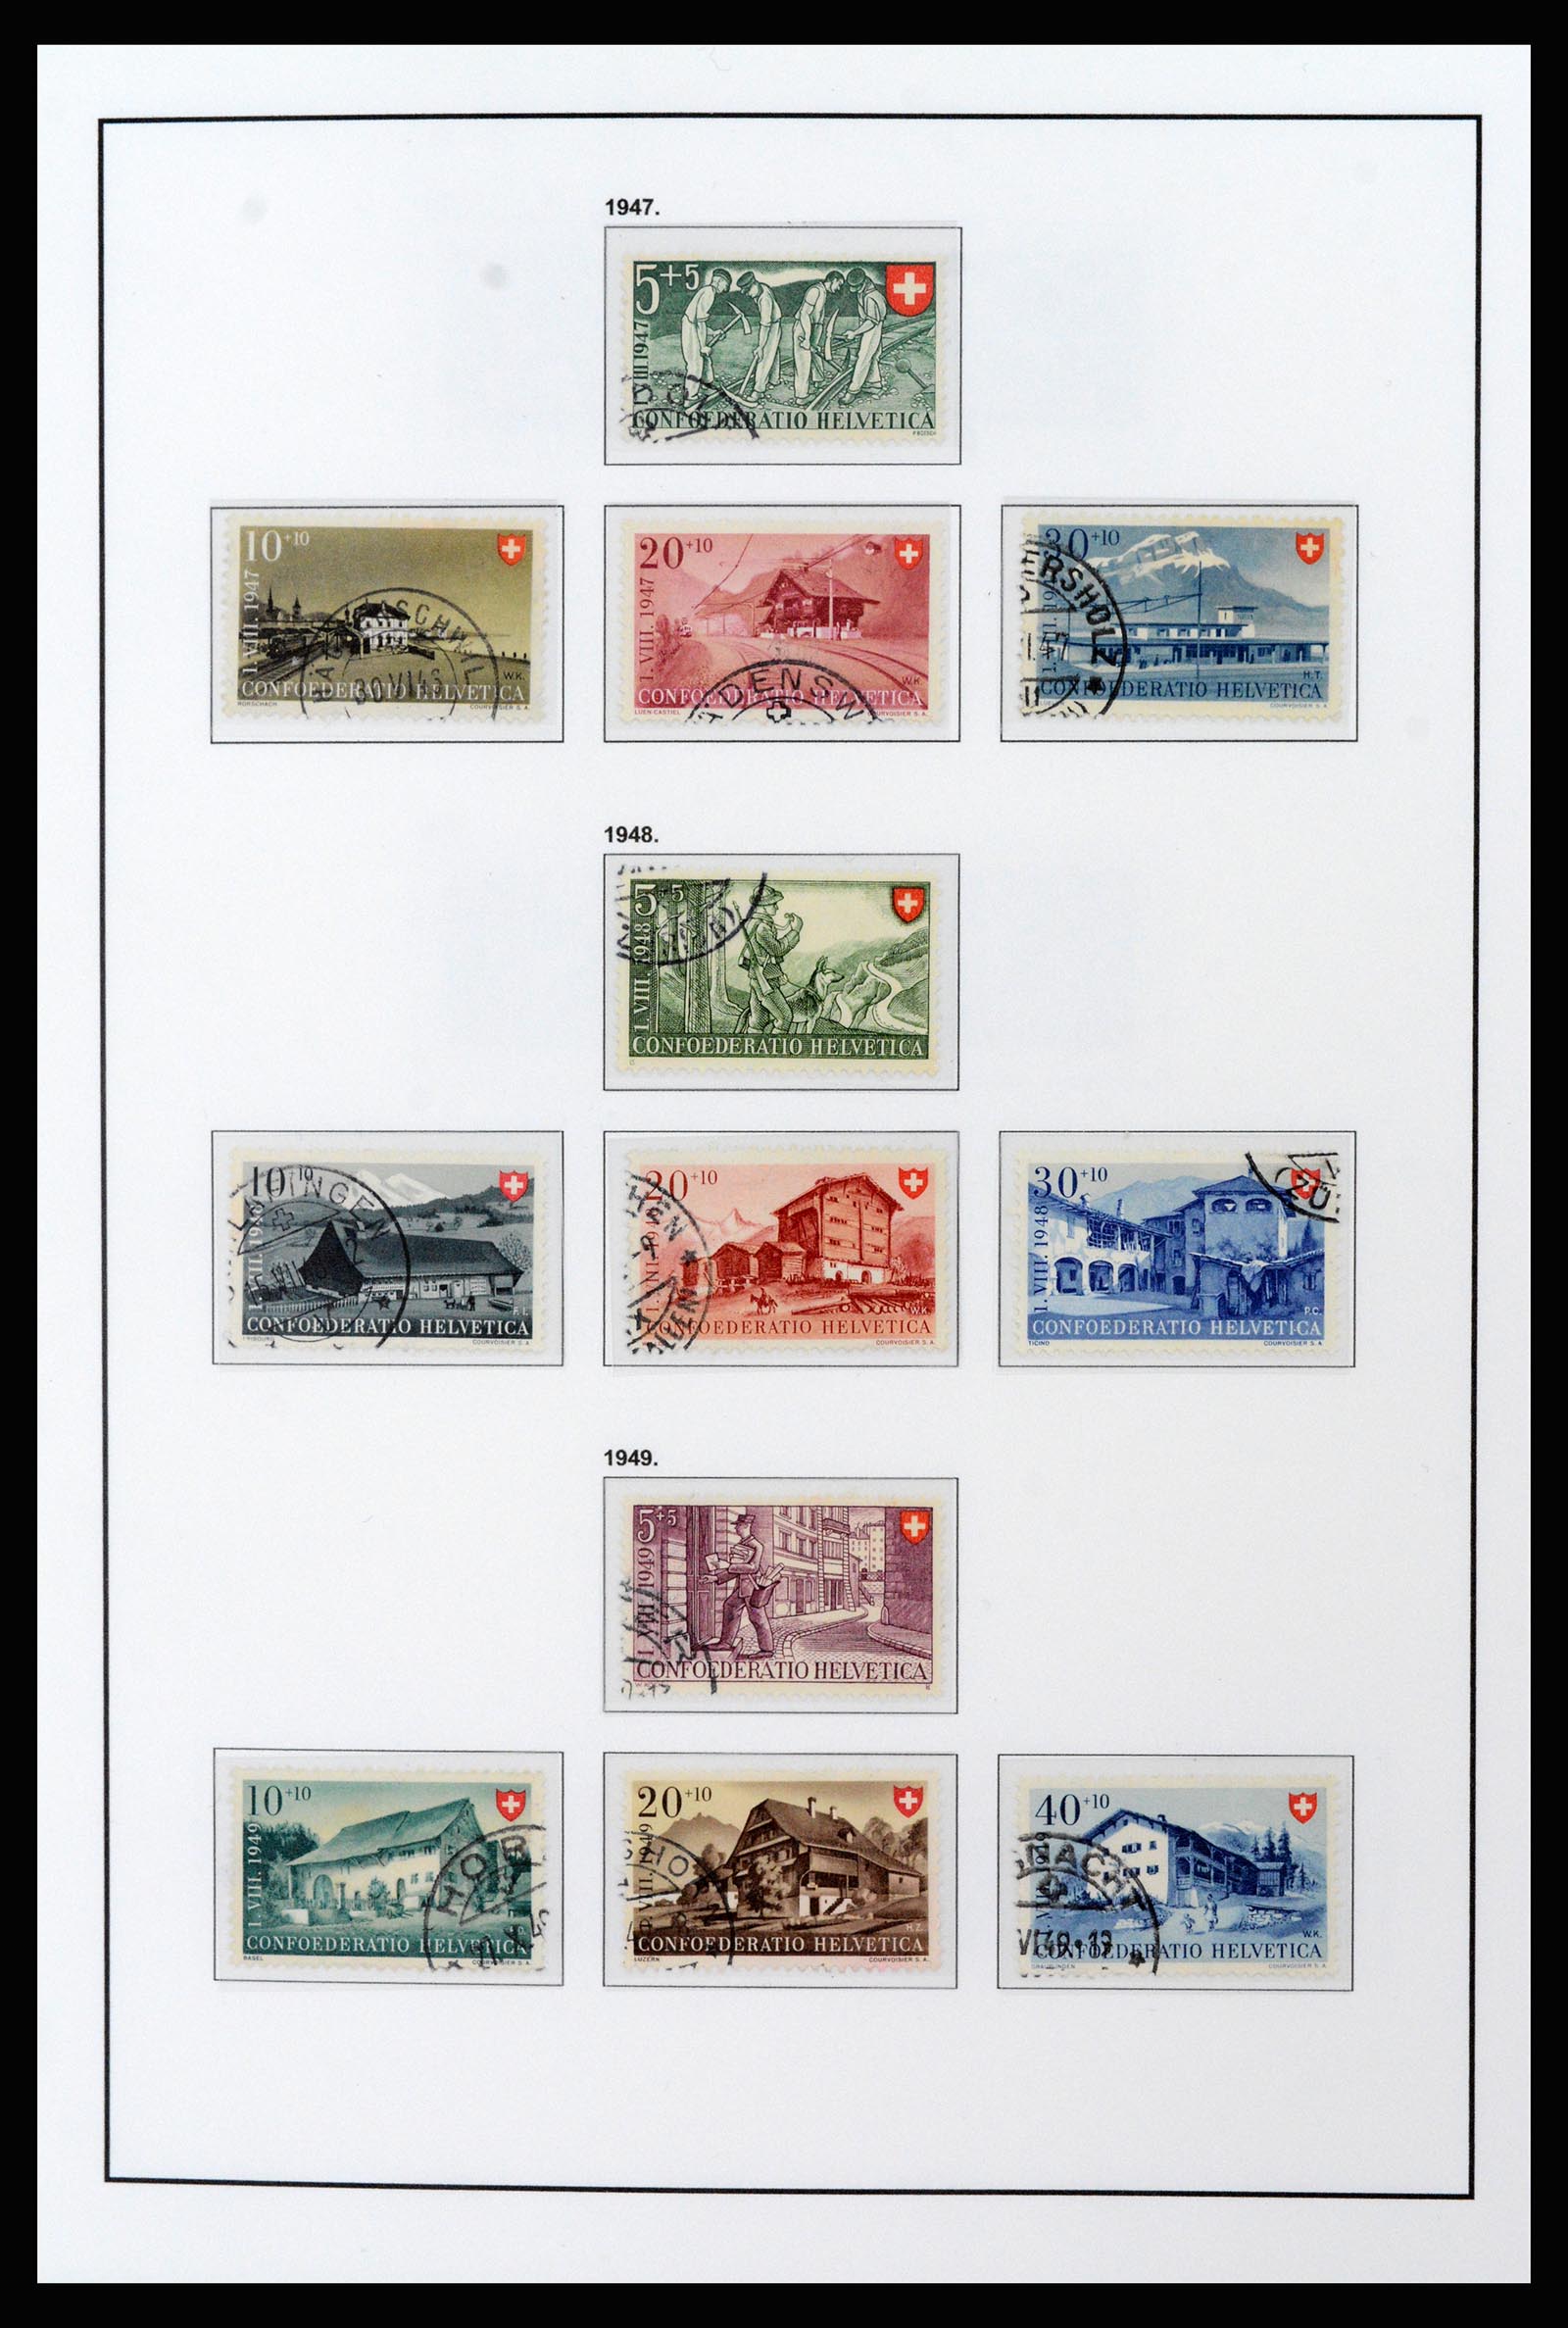 37225 078 - Stamp collection 37225 Switzerland 1854-2020.